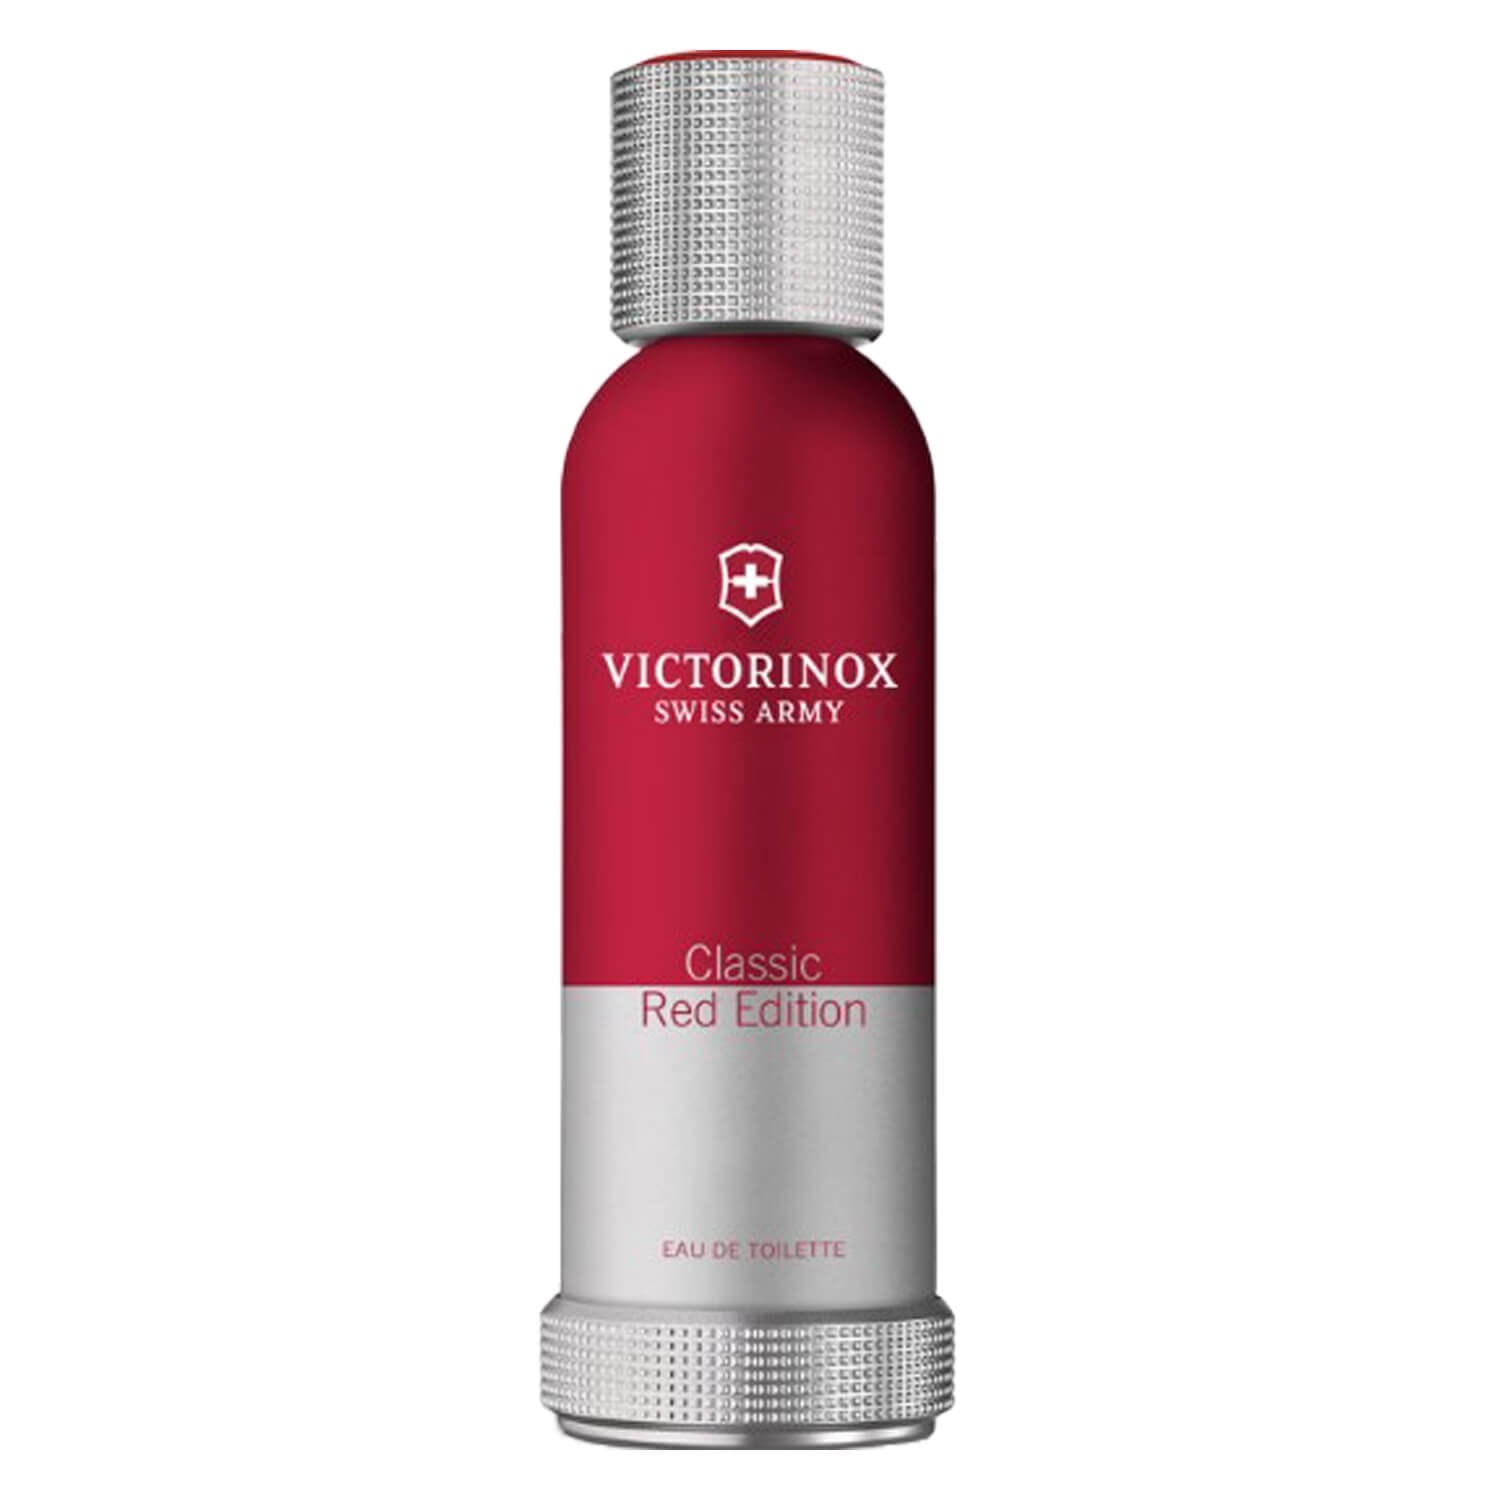 Produktbild von Victorinox Swiss Army - Classic Red Edition Eau de Toilette